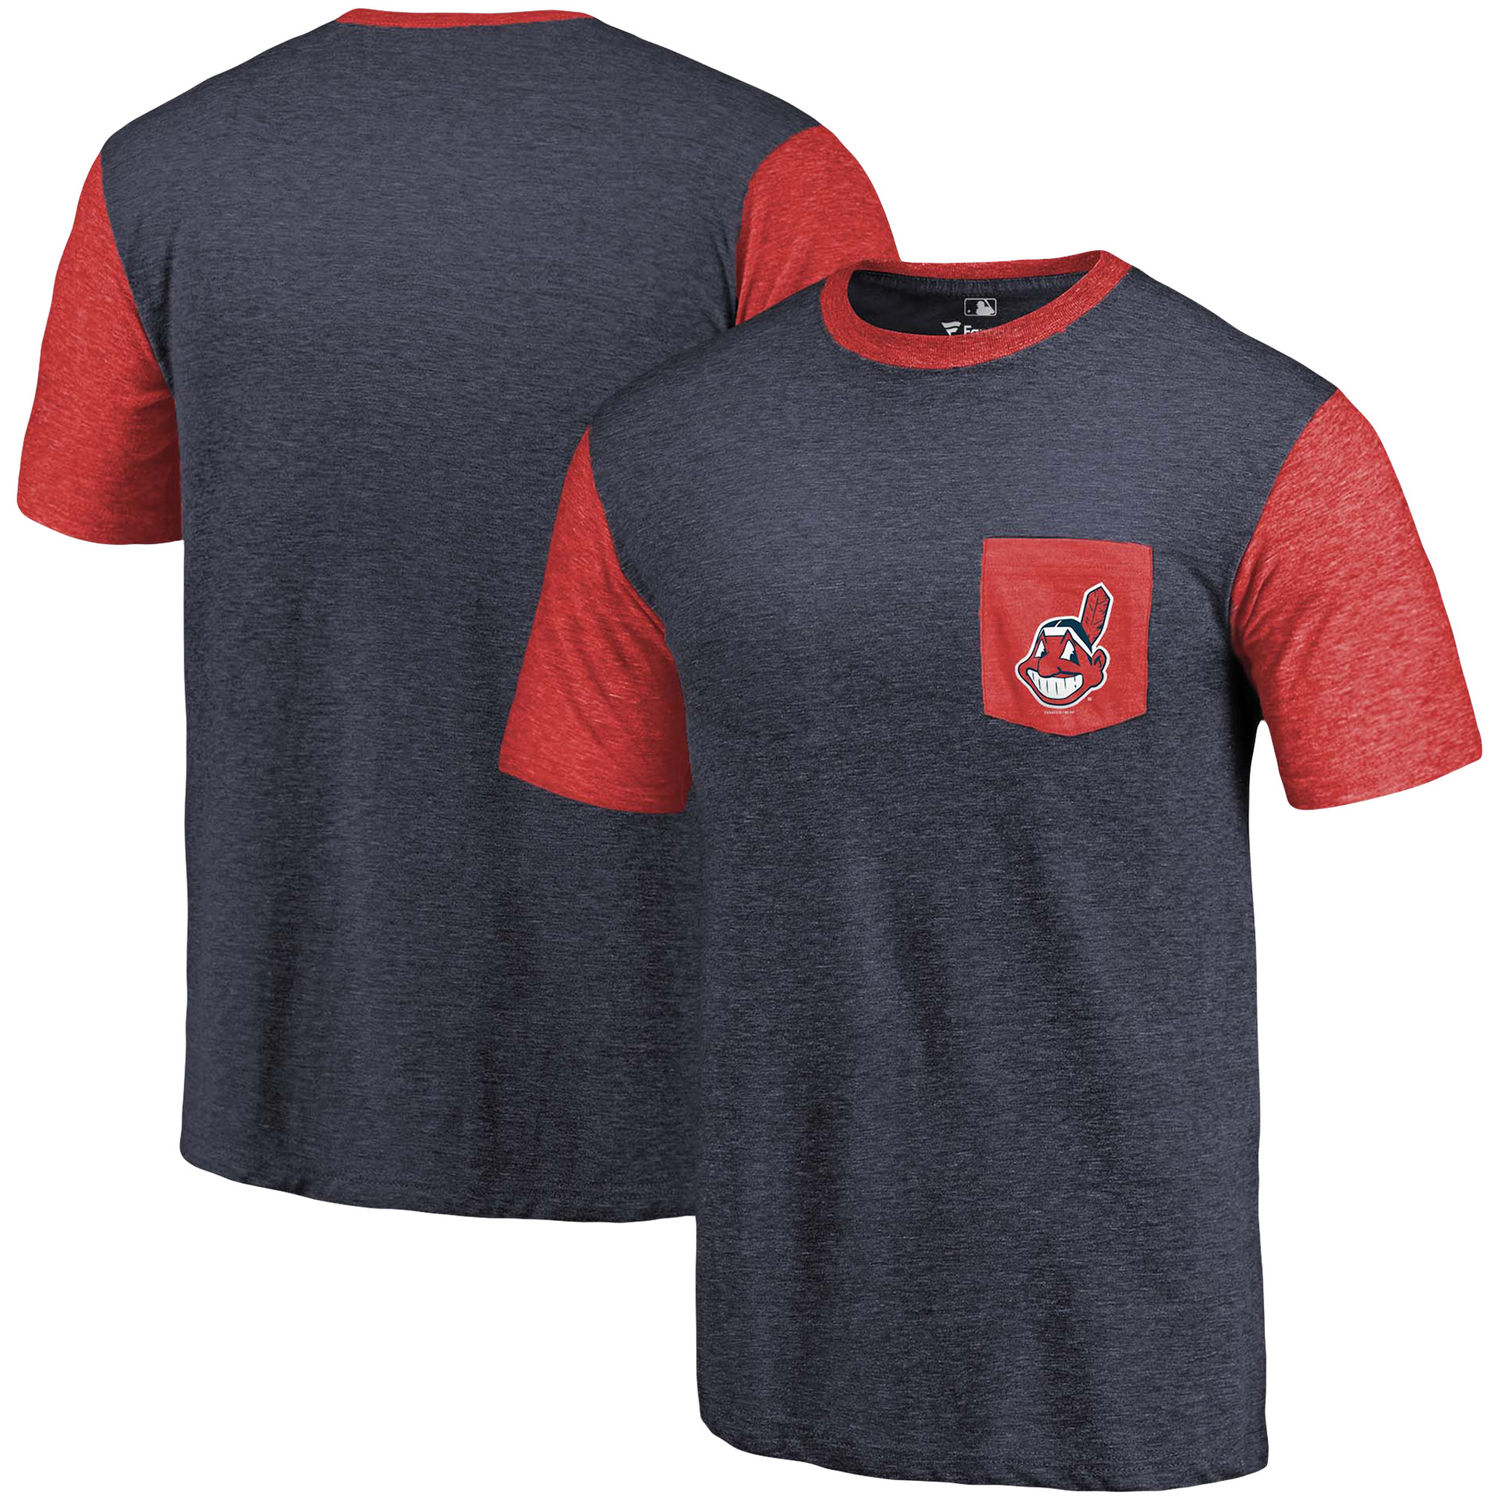 Men's Cleveland Indians Fanatics Branded Navy-Red Refresh Pocket T-Shirt